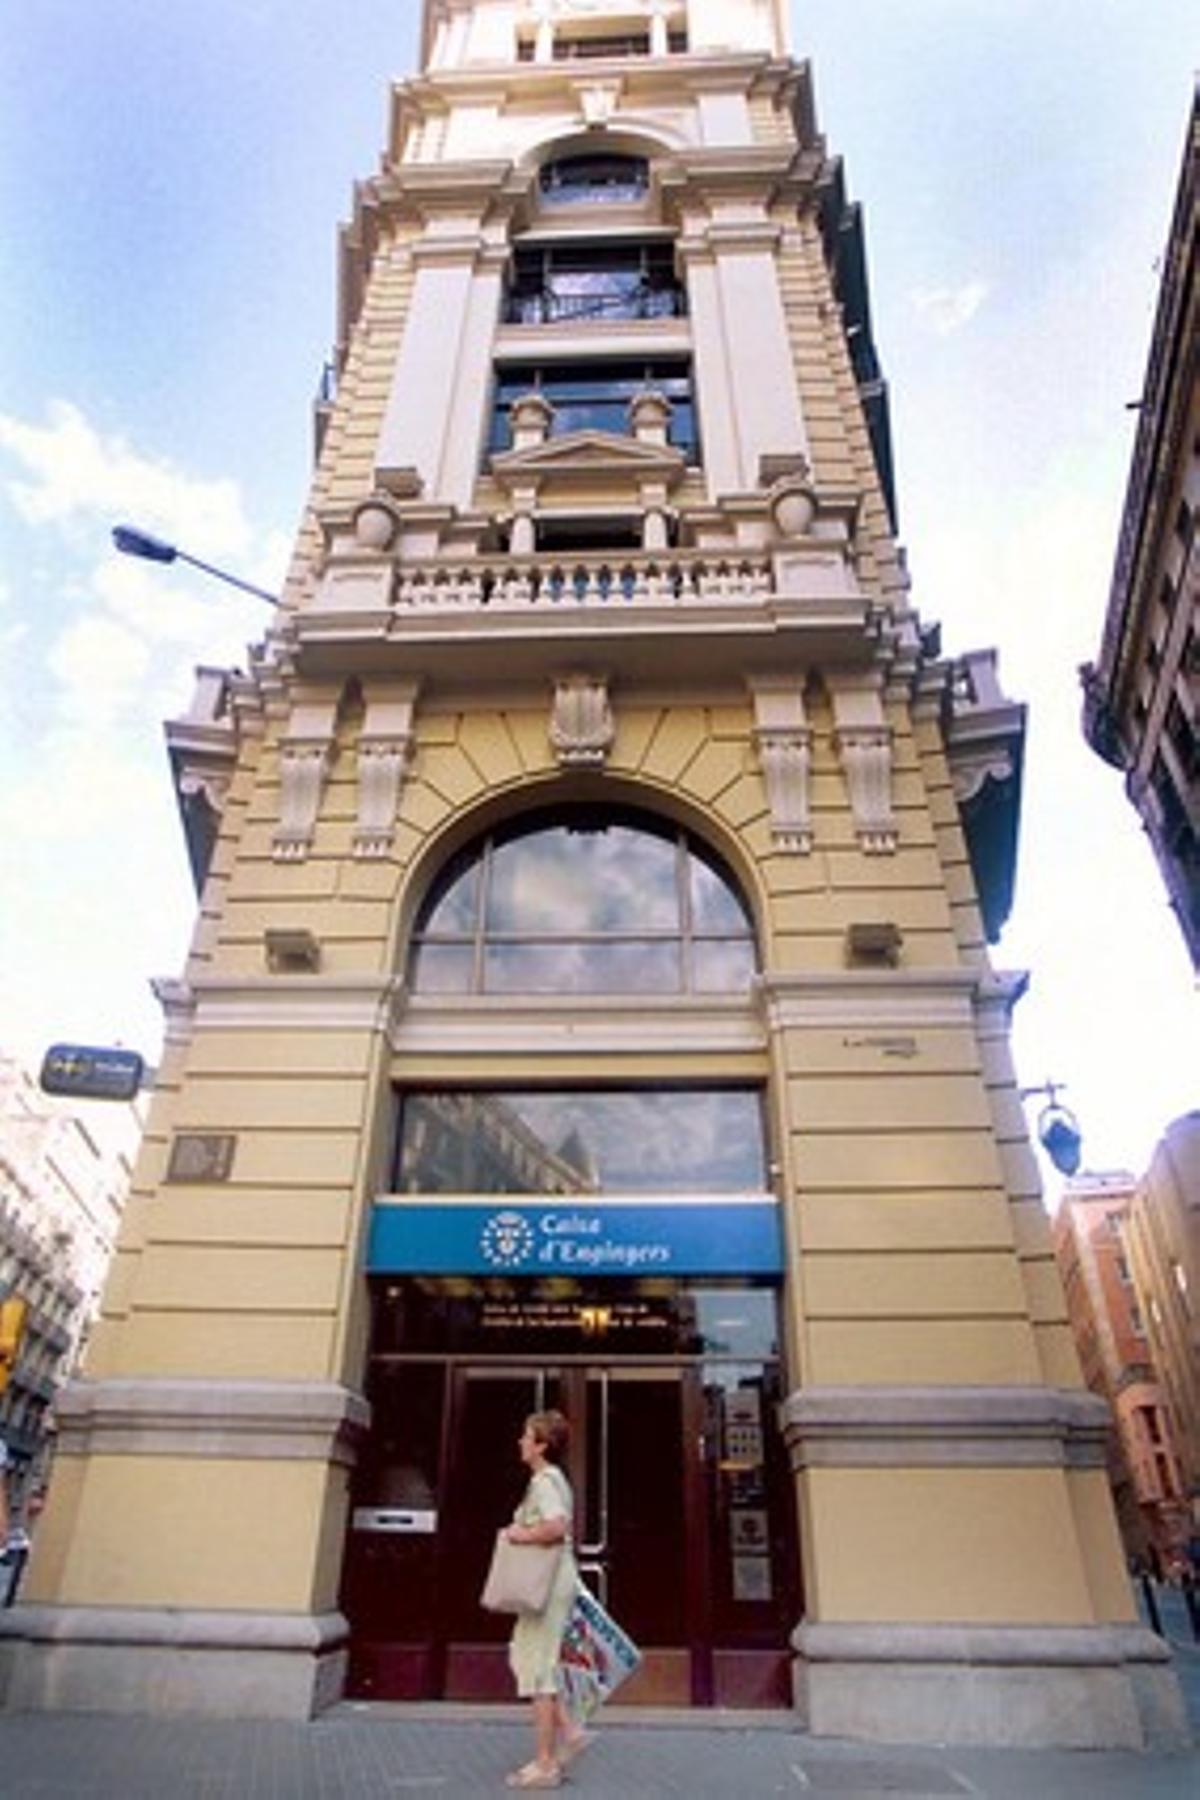 Oficina de Caixa d’Enginyers a la Via Laietana de Barcelona.